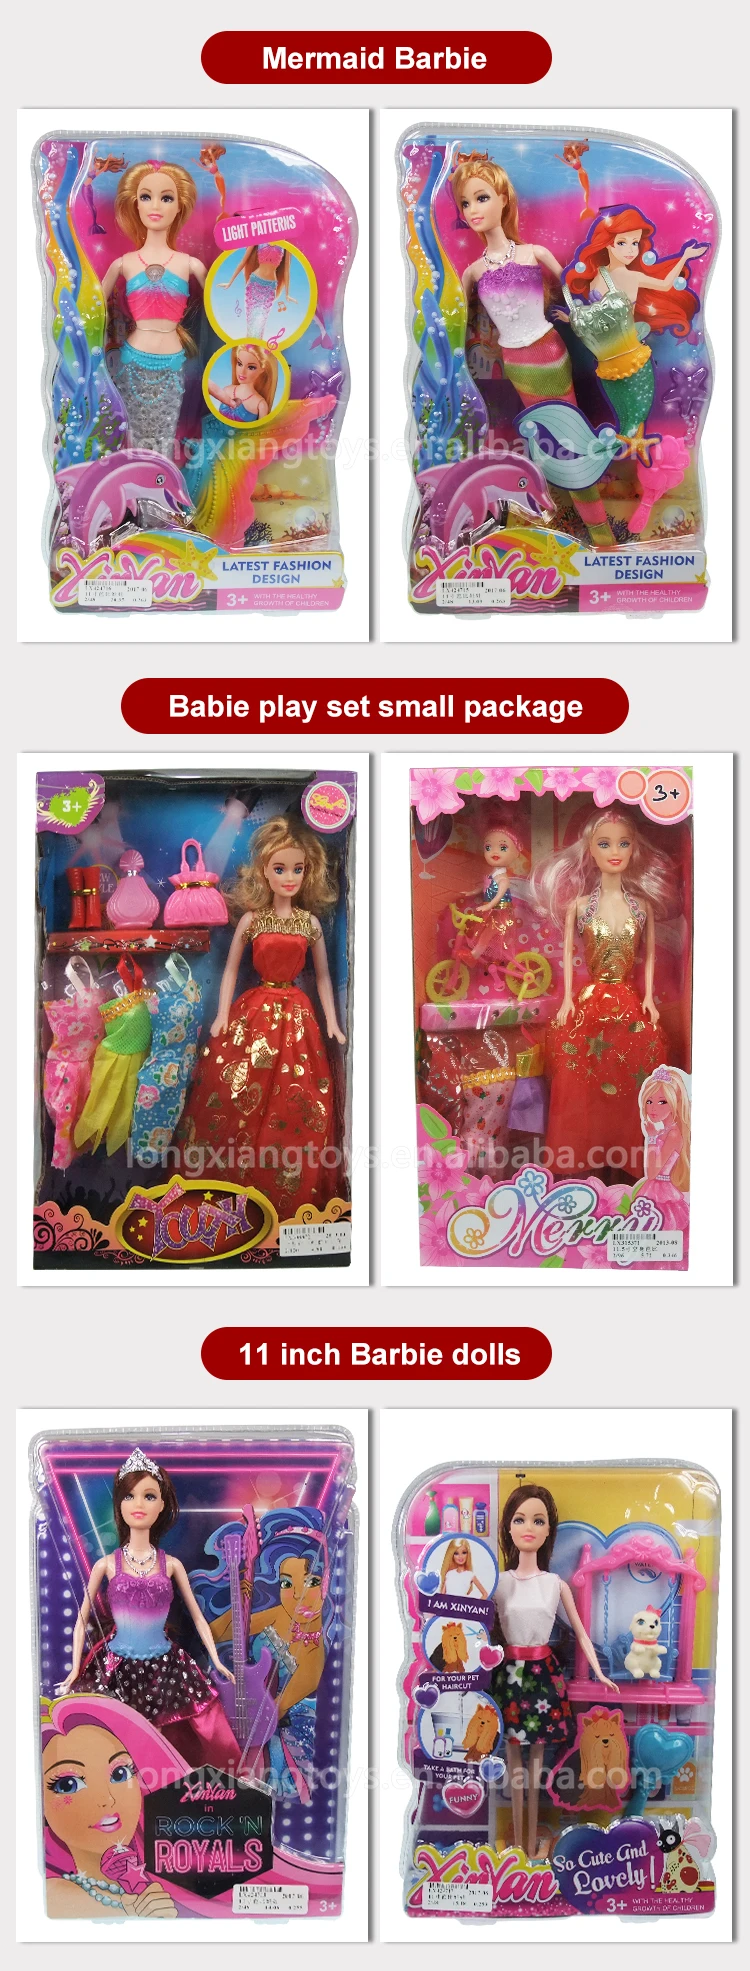 Toy Educational Latest Vinyl Non-Toxic Plastic Fashion Dolls 3.5 Inch